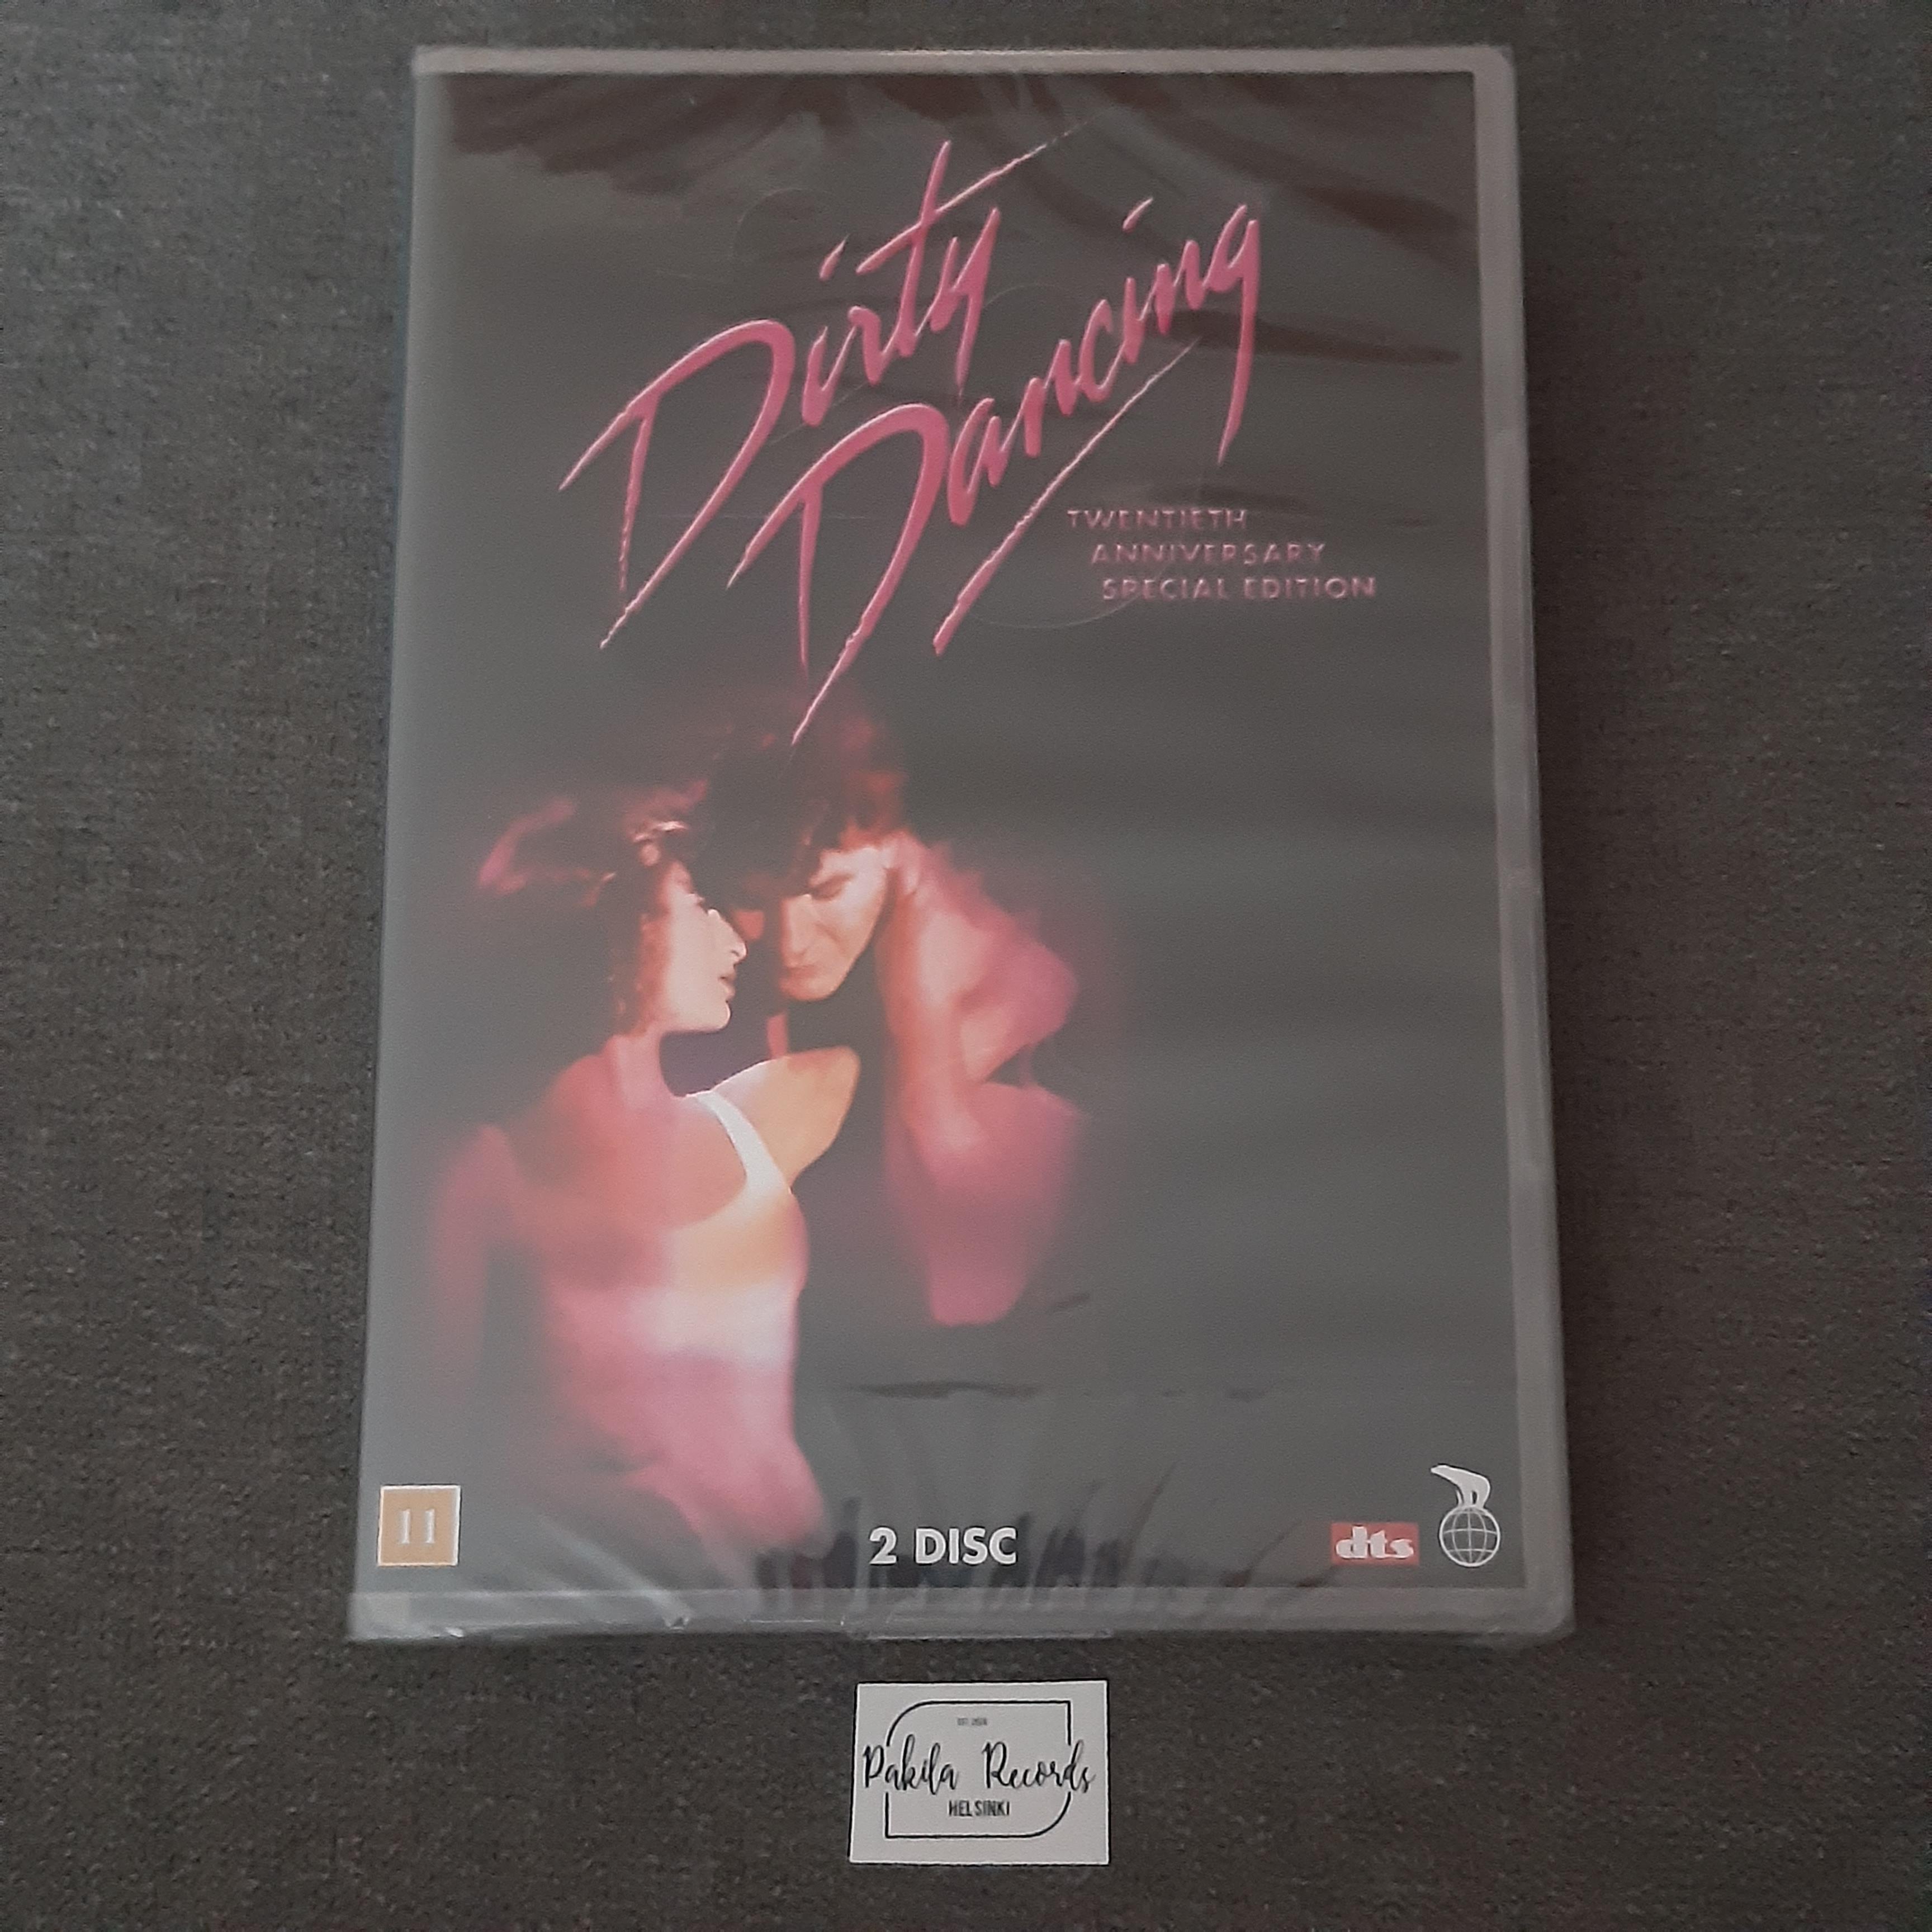 Dirty Dancing, Twentieth Anniversary Speciel Edition - 2 DVD (käytetty)